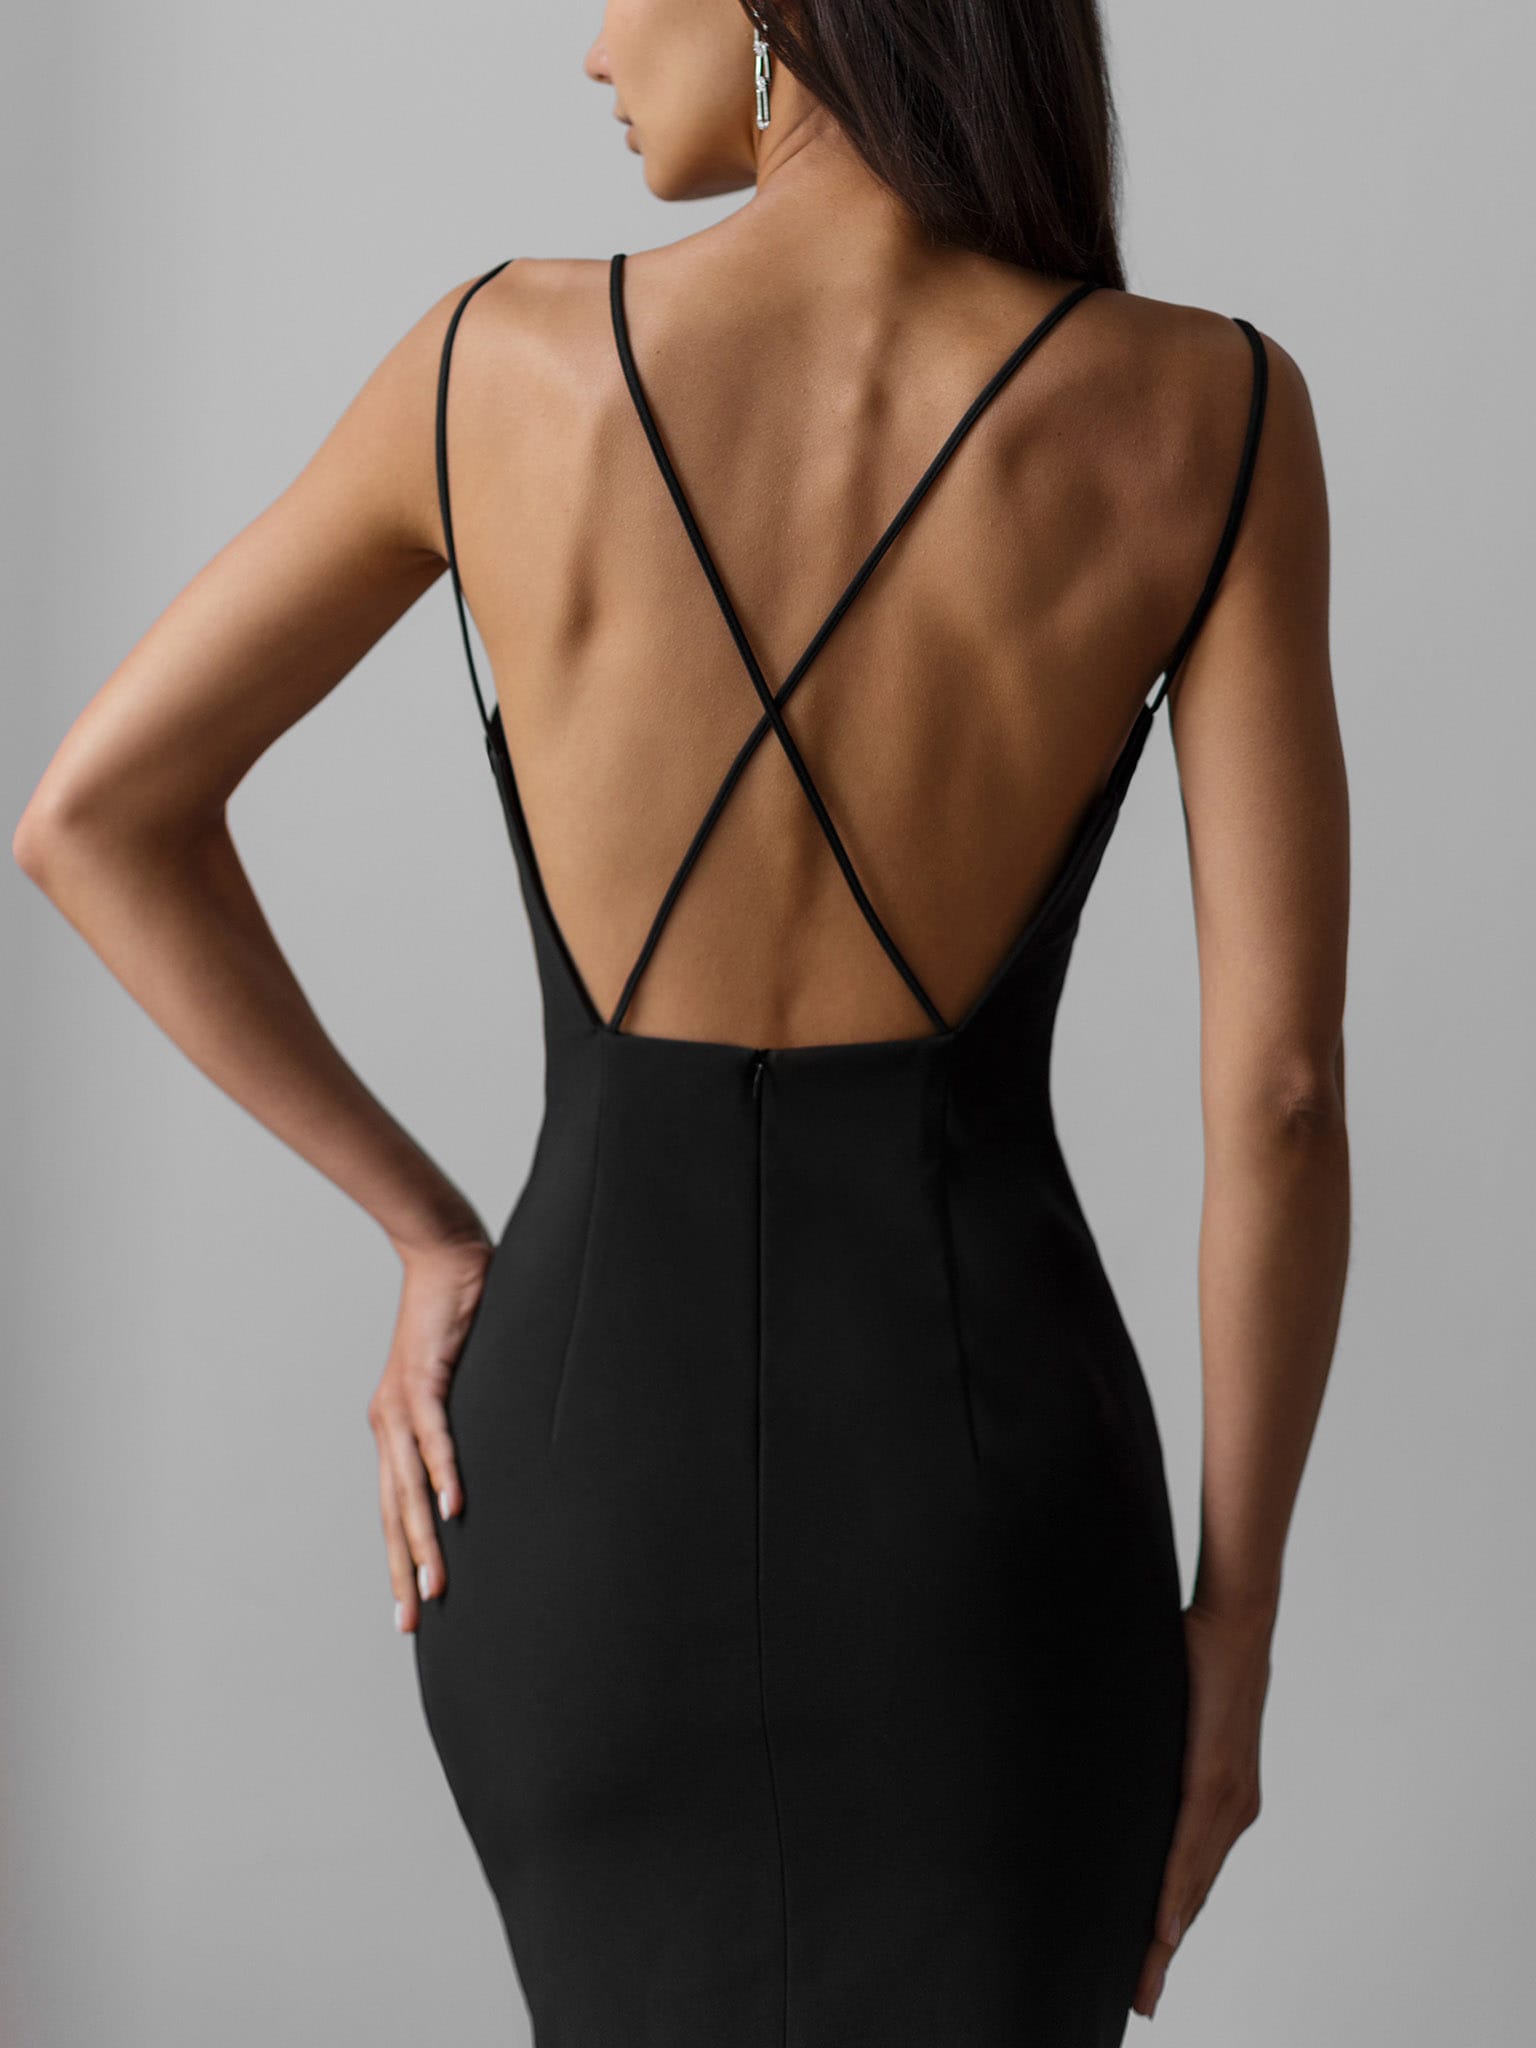 A-Line Halter Floor Length Black Open Back Lace Prom Dress with Split –  Pgmdress